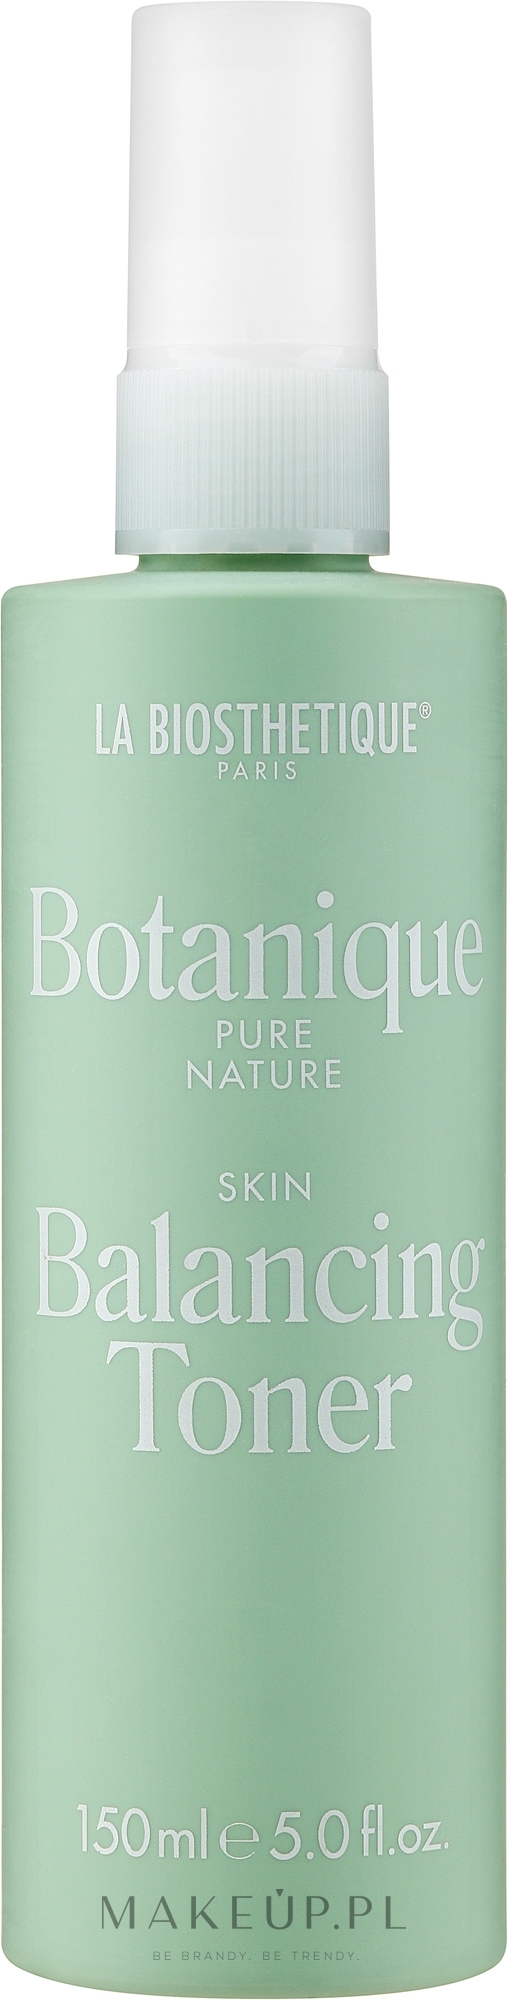 Balansujący tonik do twarzy - La Biosthetique Botanique Pure Nature Balancing Toner — Zdjęcie 150 ml